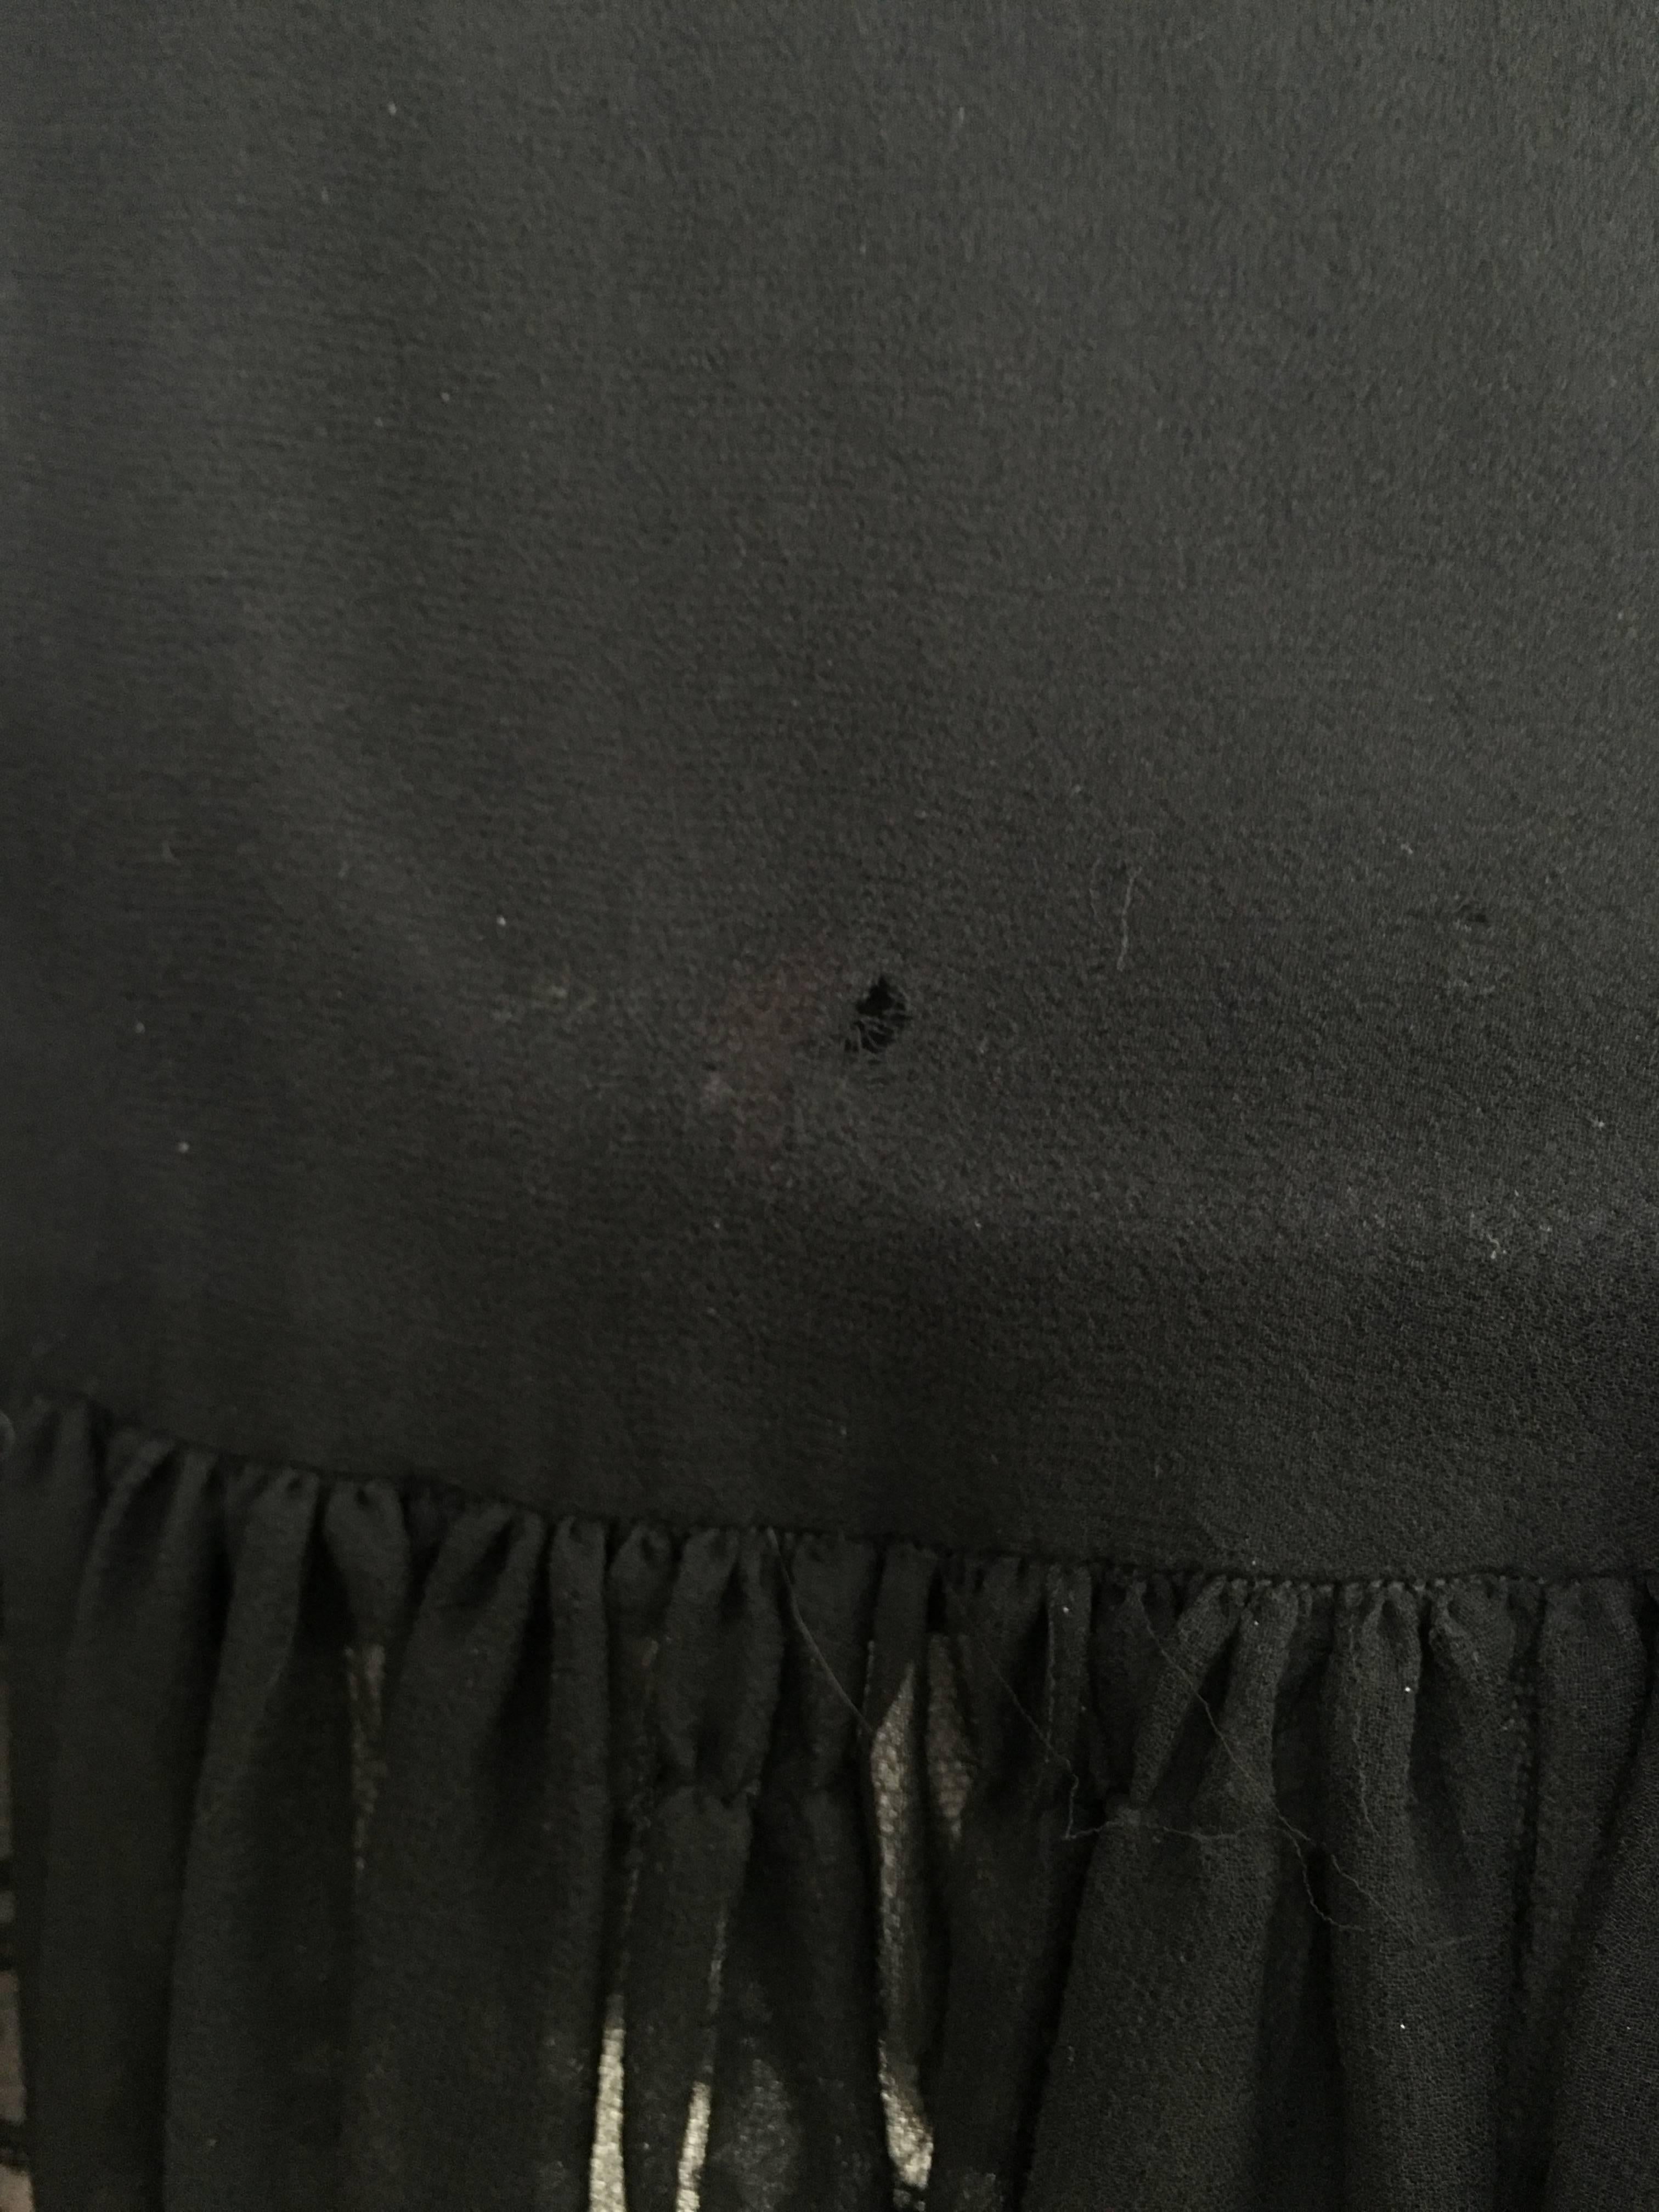 Gray Scott Barrie Black Chiffon Ruffled Sheer Dress Size 4. For Sale